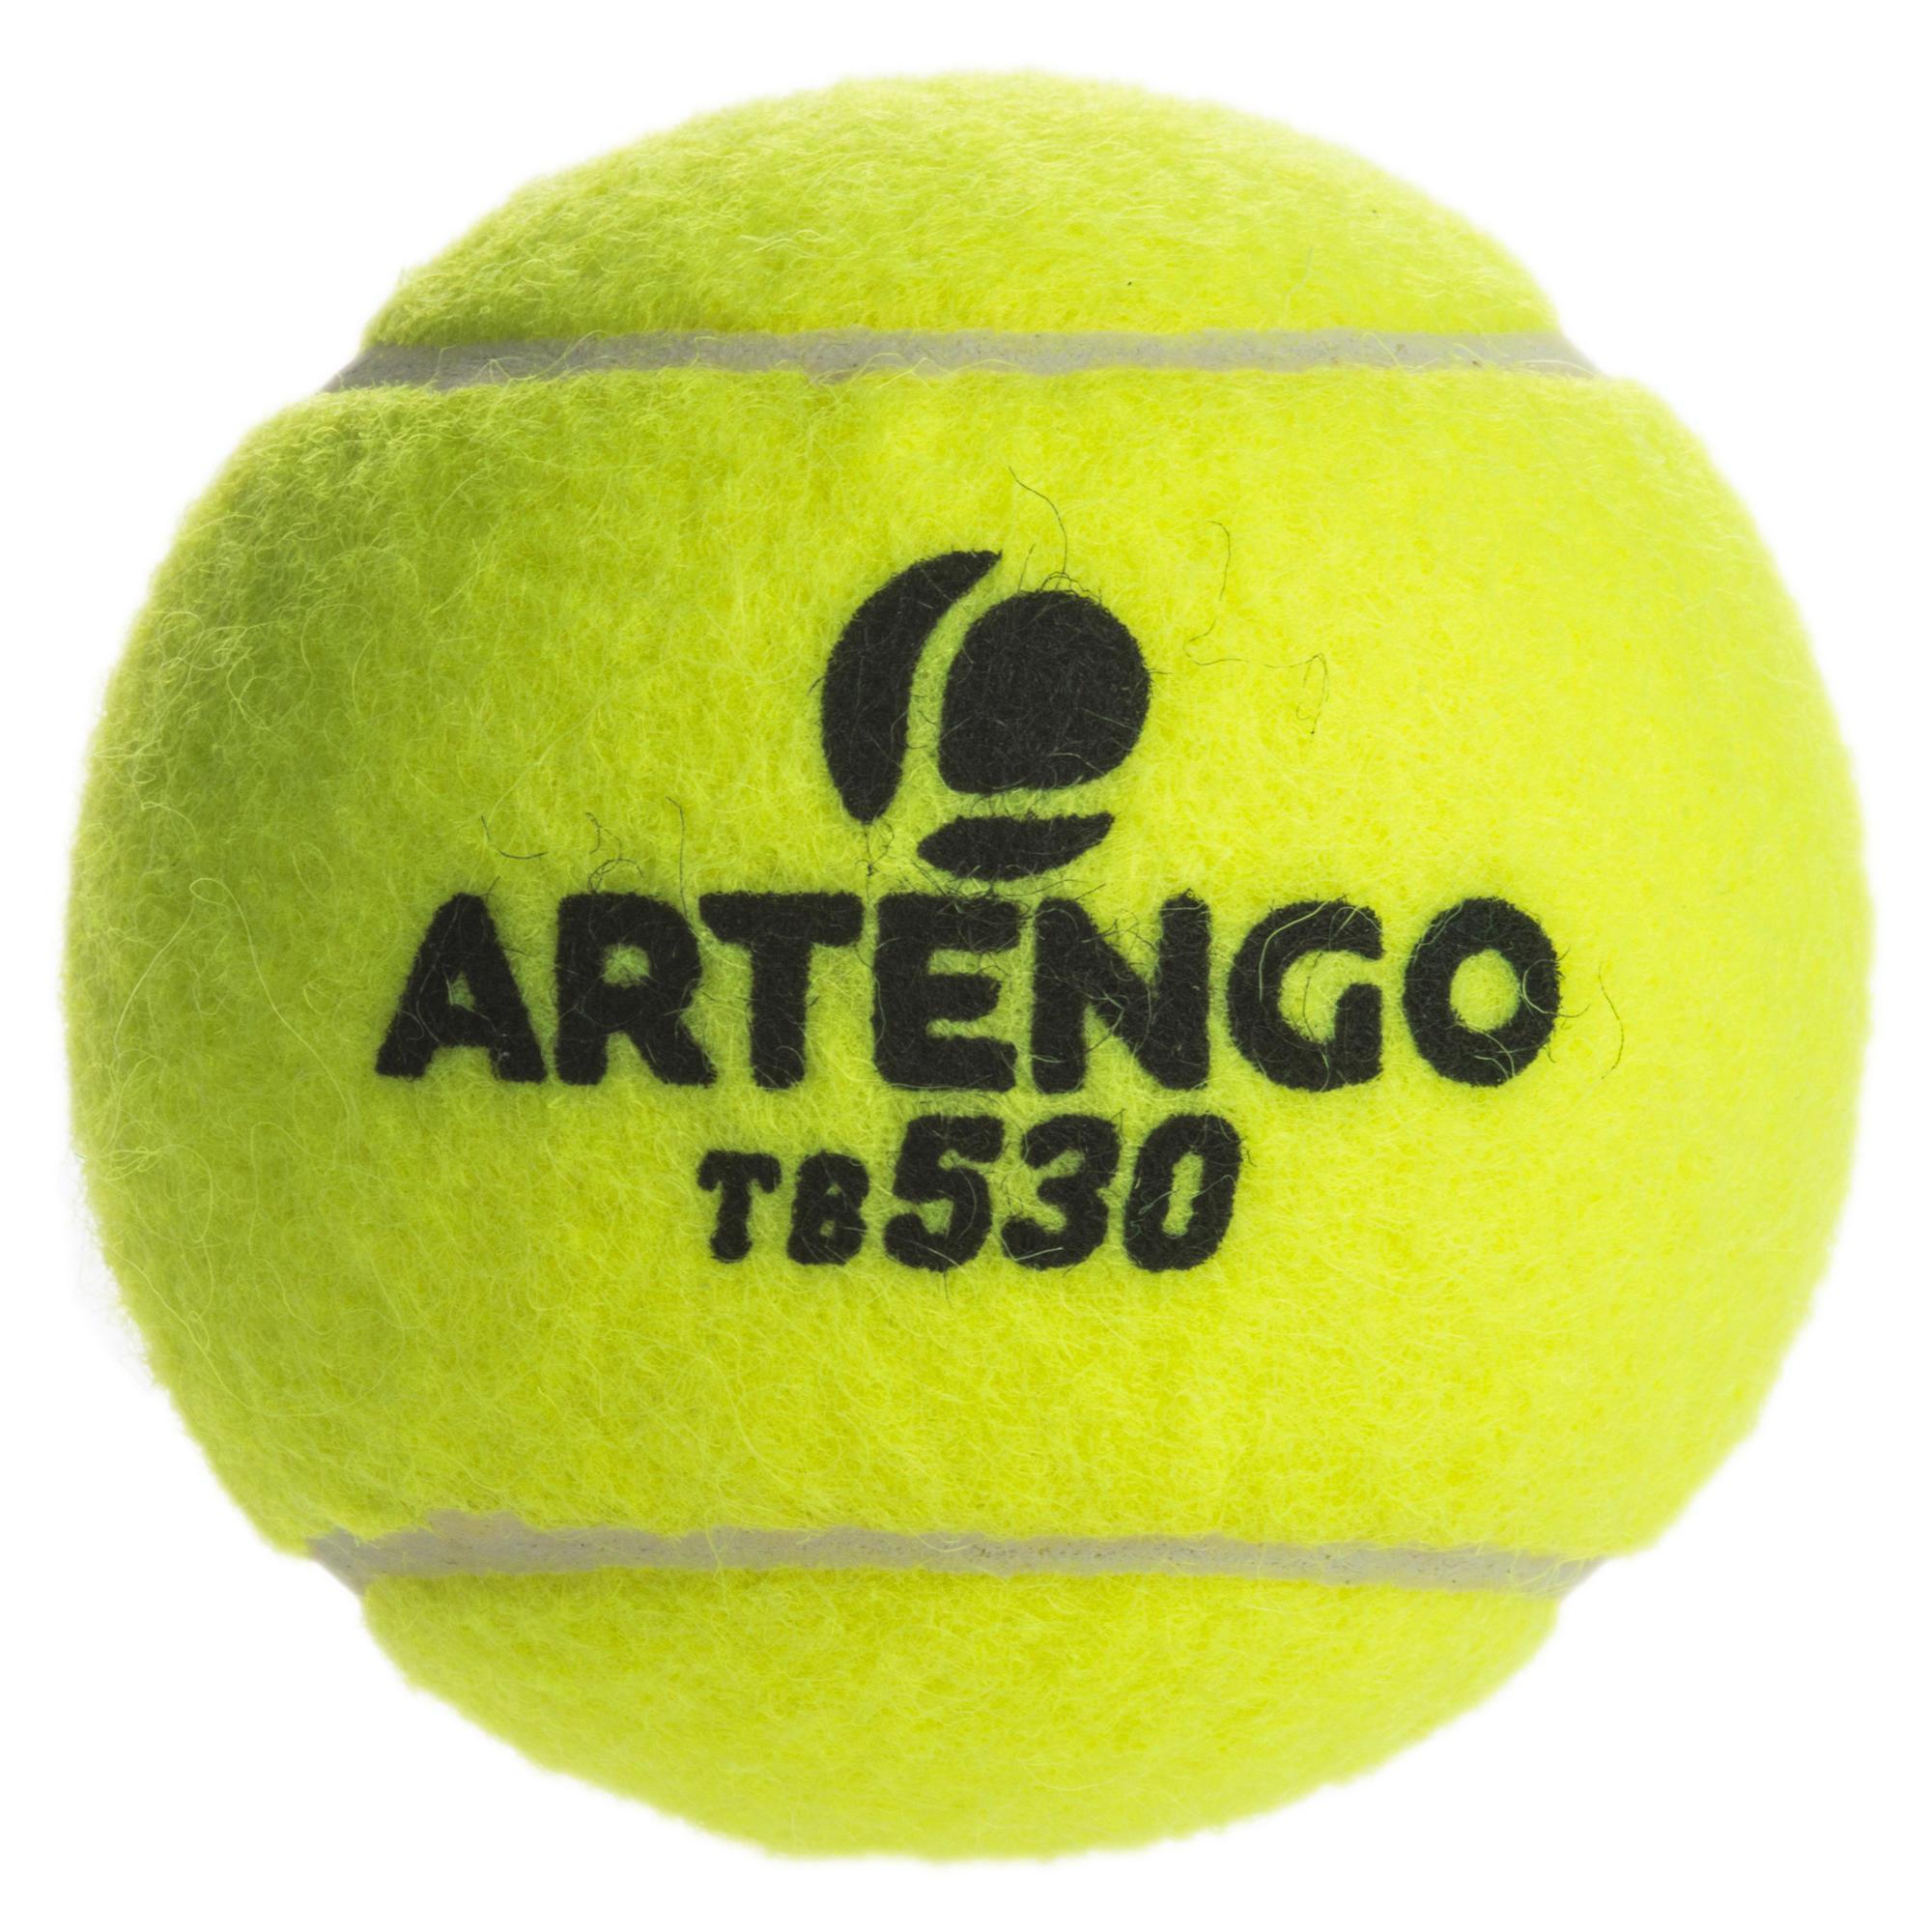 Tennis Balls TB530 3-Pack - Decathlon